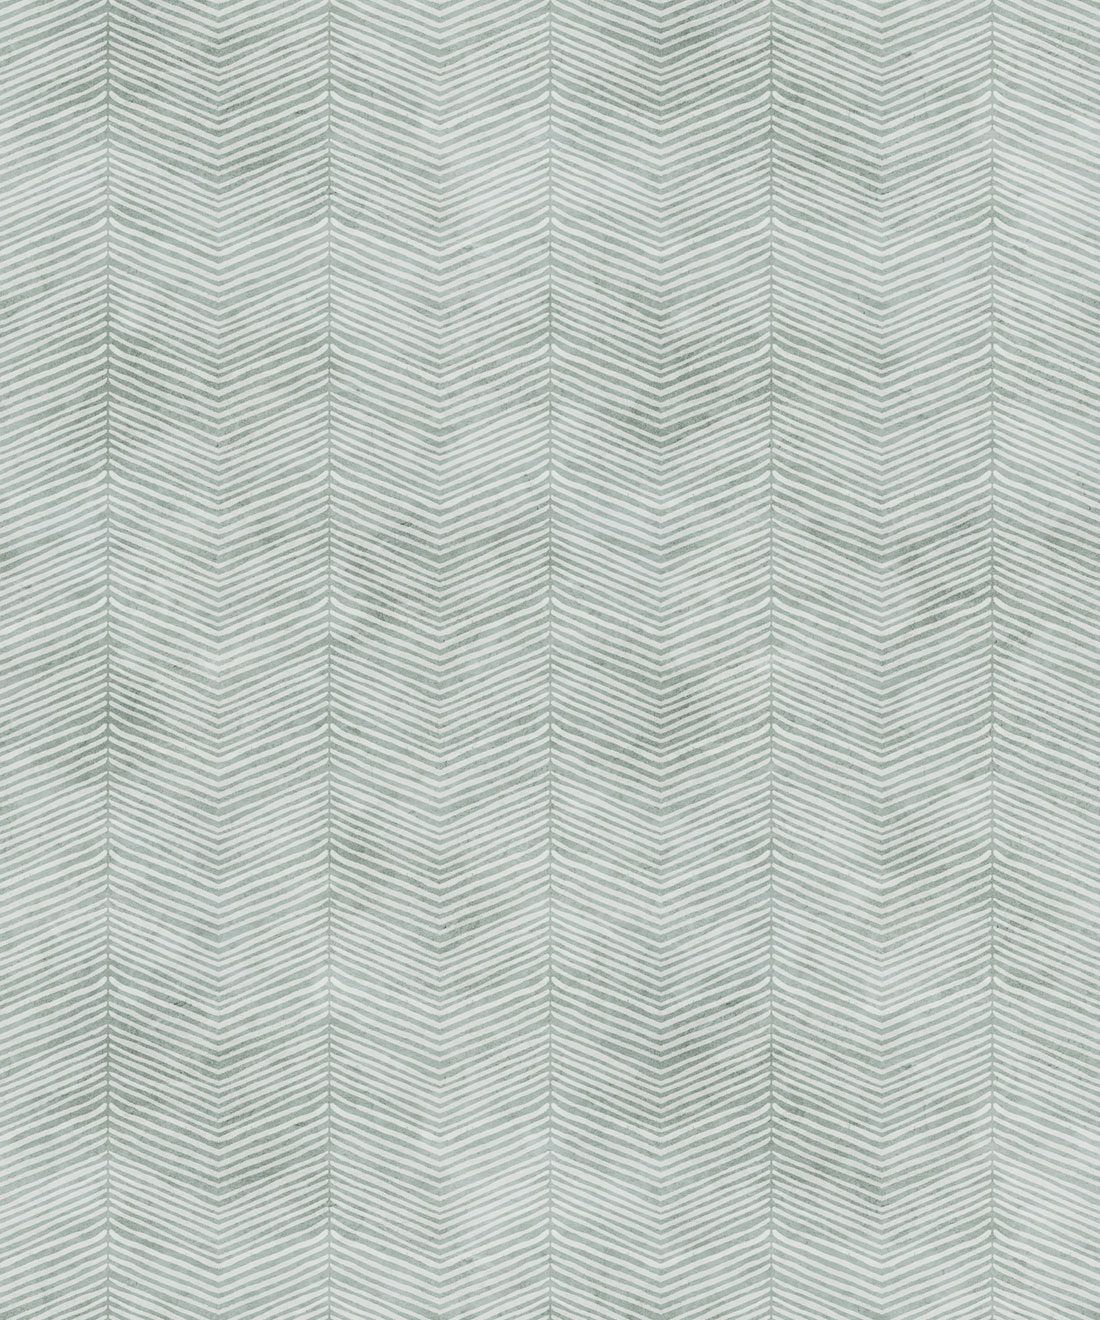 Herringbone Wallpaper, Rustic Geometric Design EU